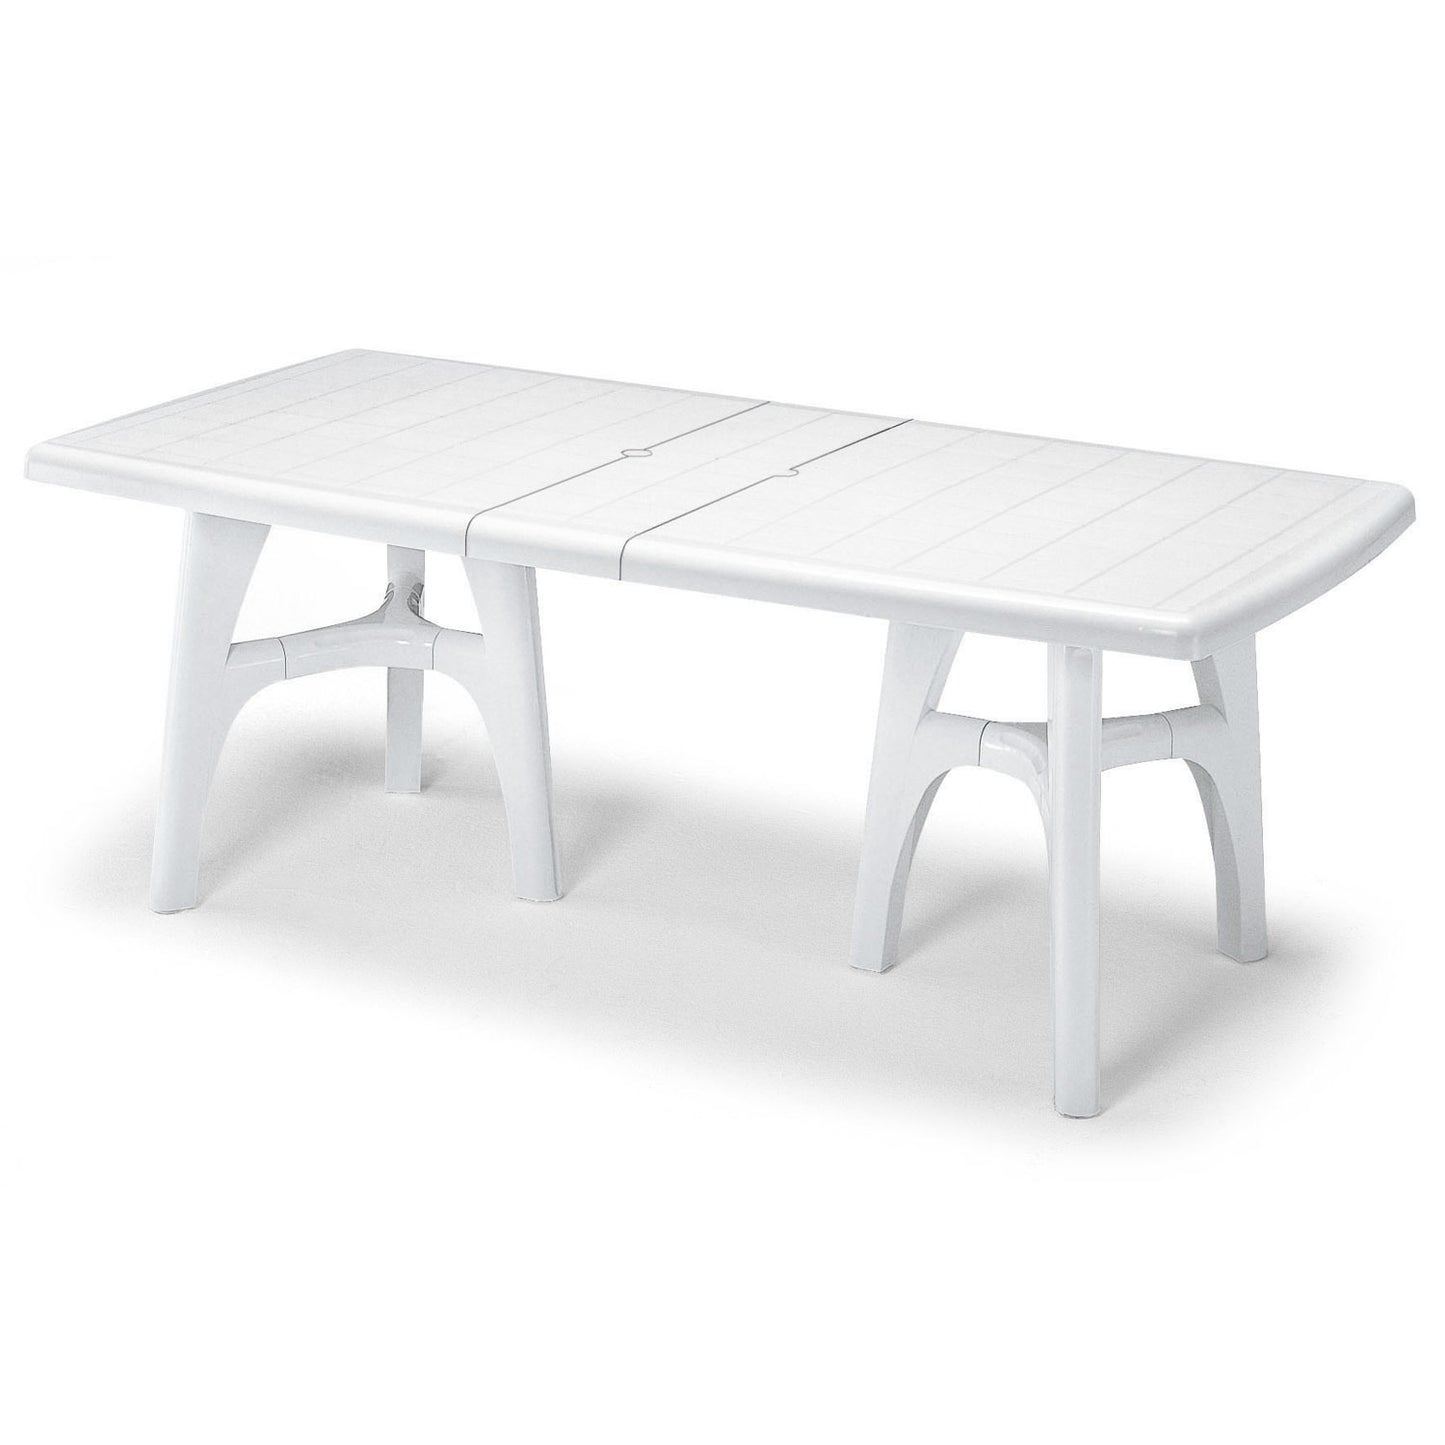 President Tris 220cm / 195cm / 170cm x 95cm Extending Rectangular Dining Table by Scab Design